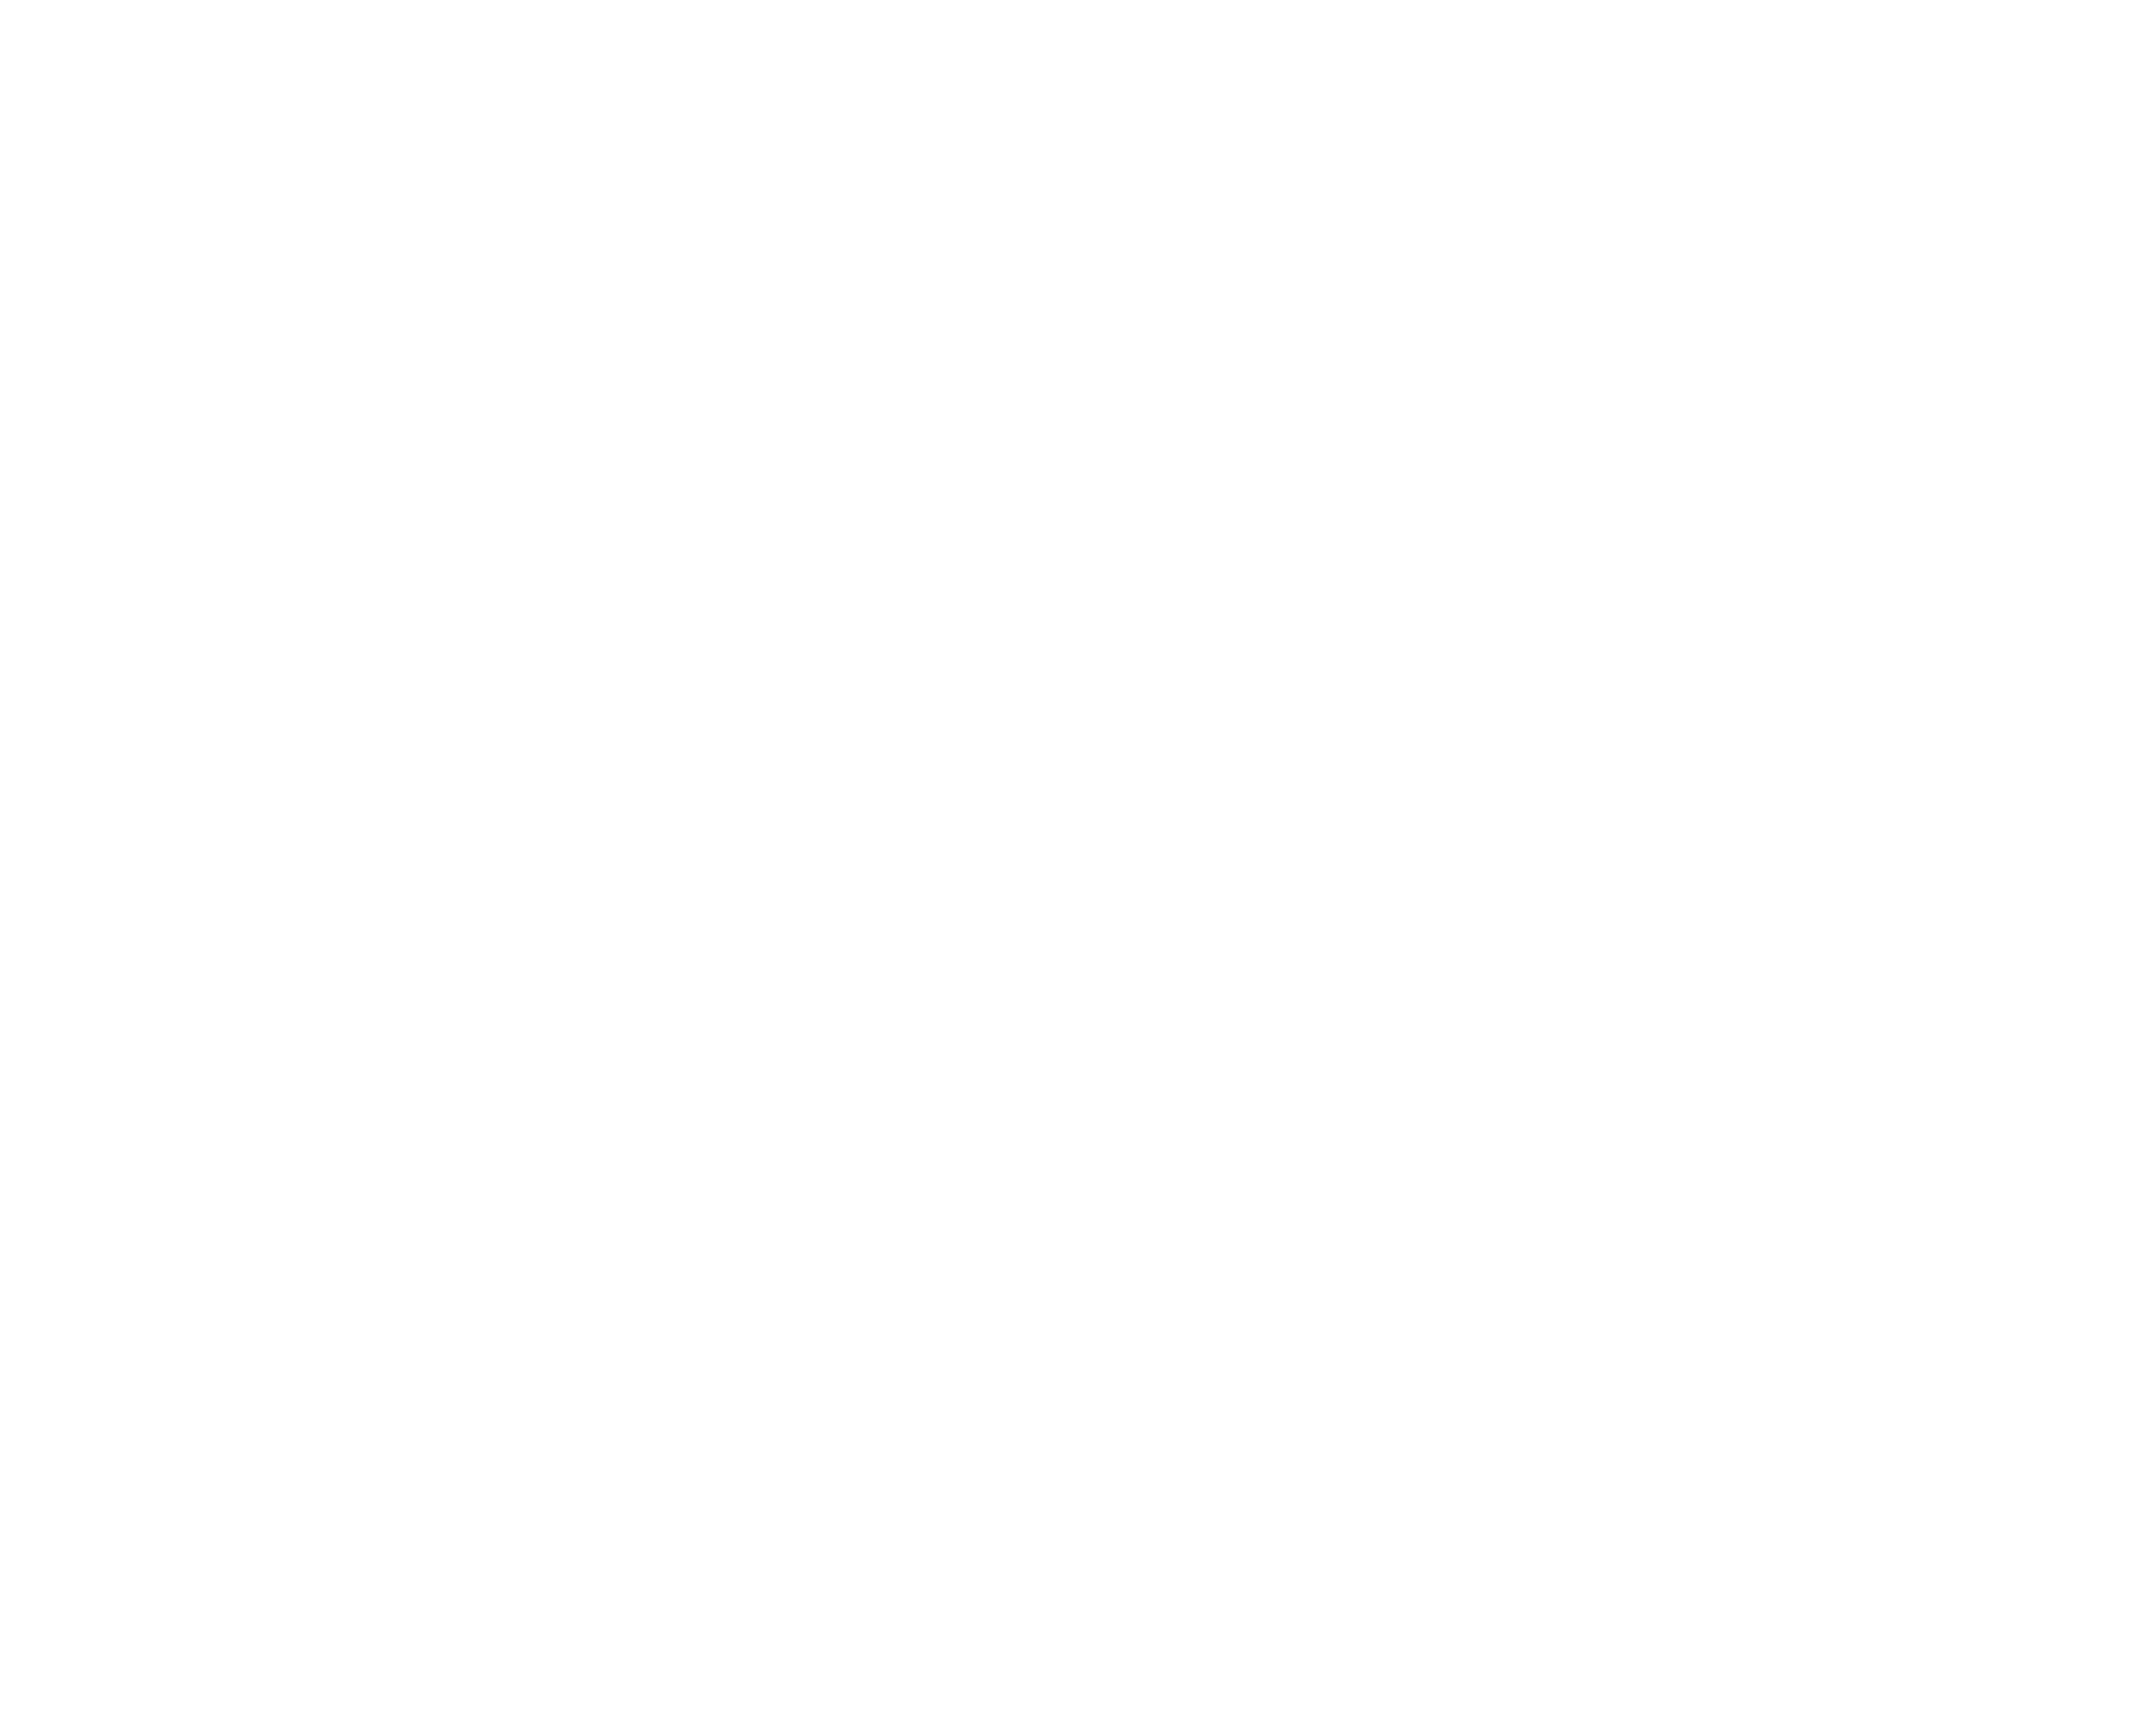 200 Columns